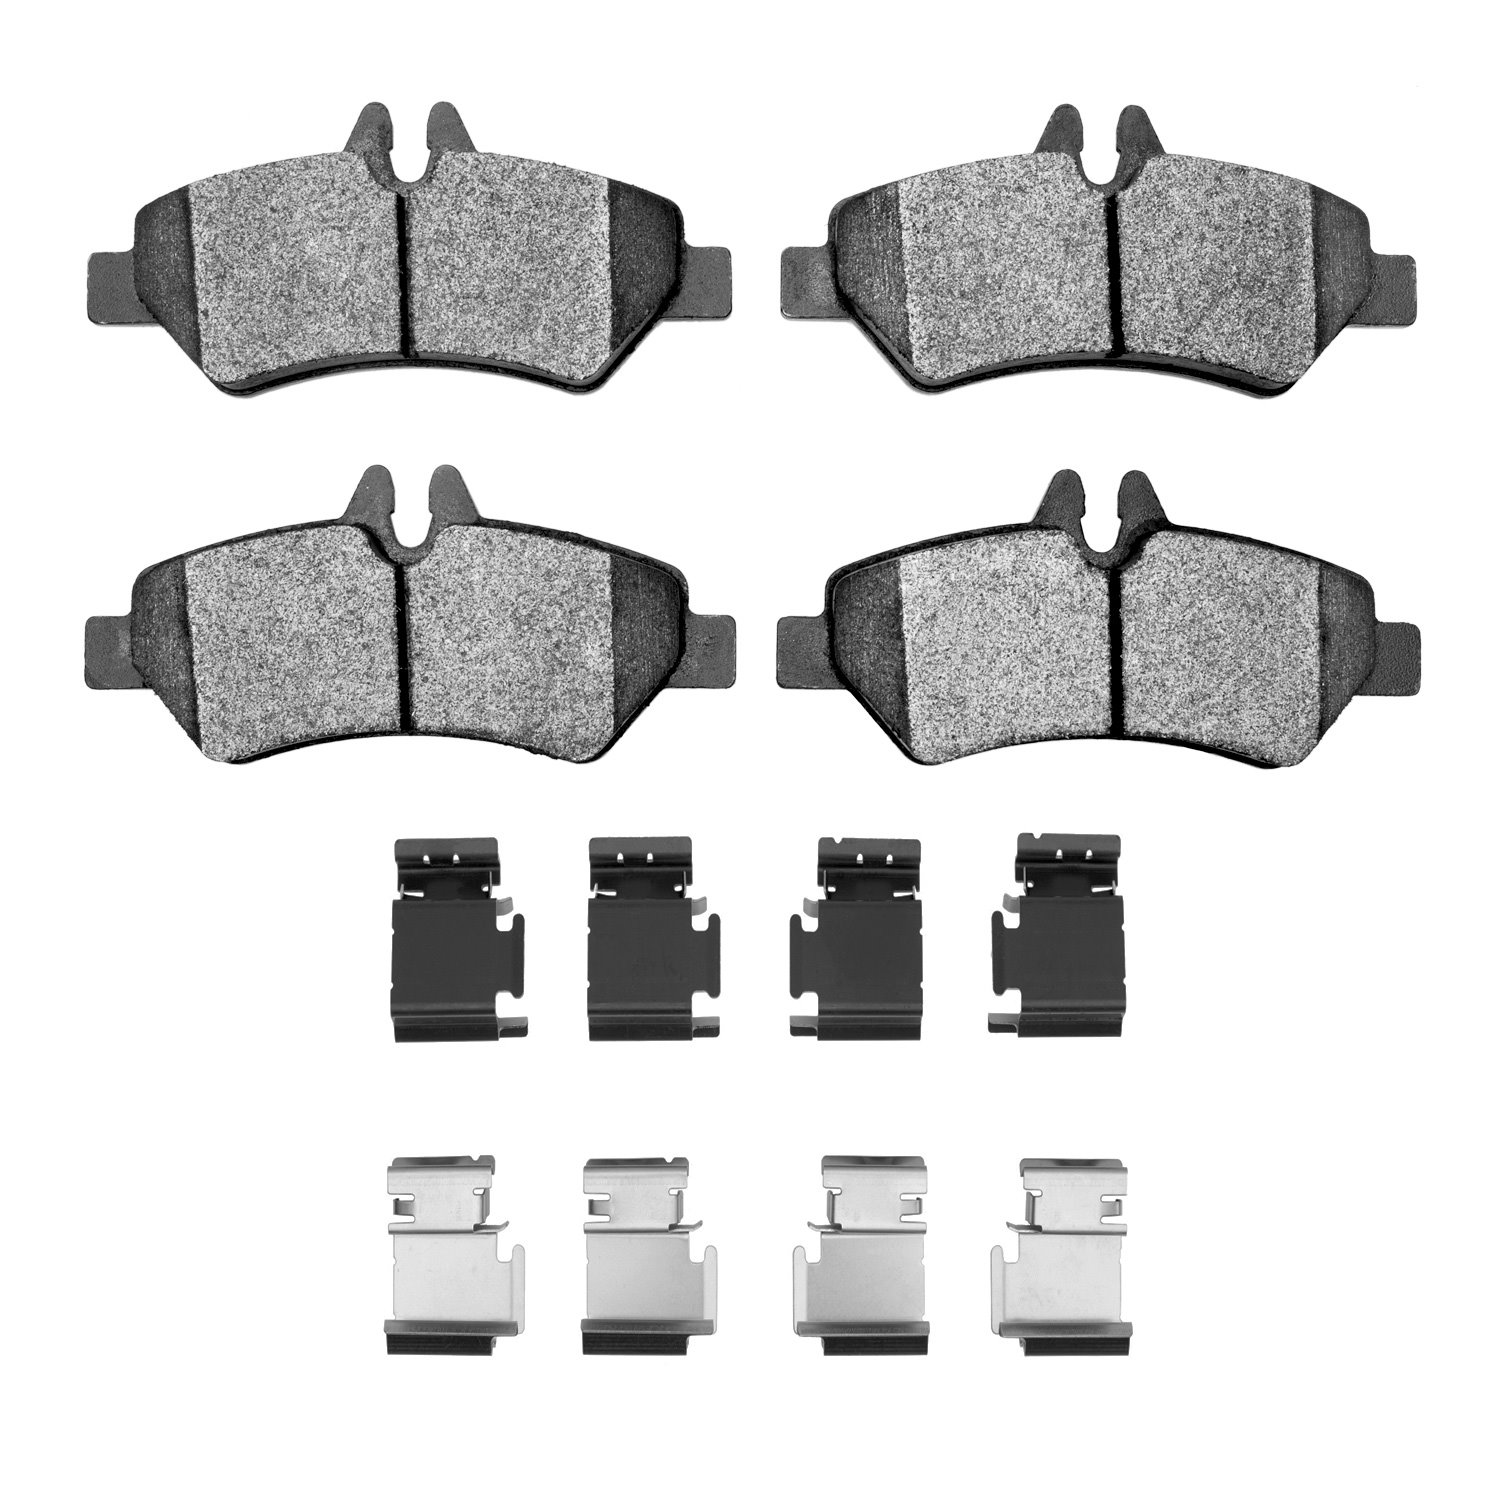 Semi-Metallic Brake Pads & Hardware Kit, 2006-2018 Fits Multiple Makes/Models, Position: Rear Right